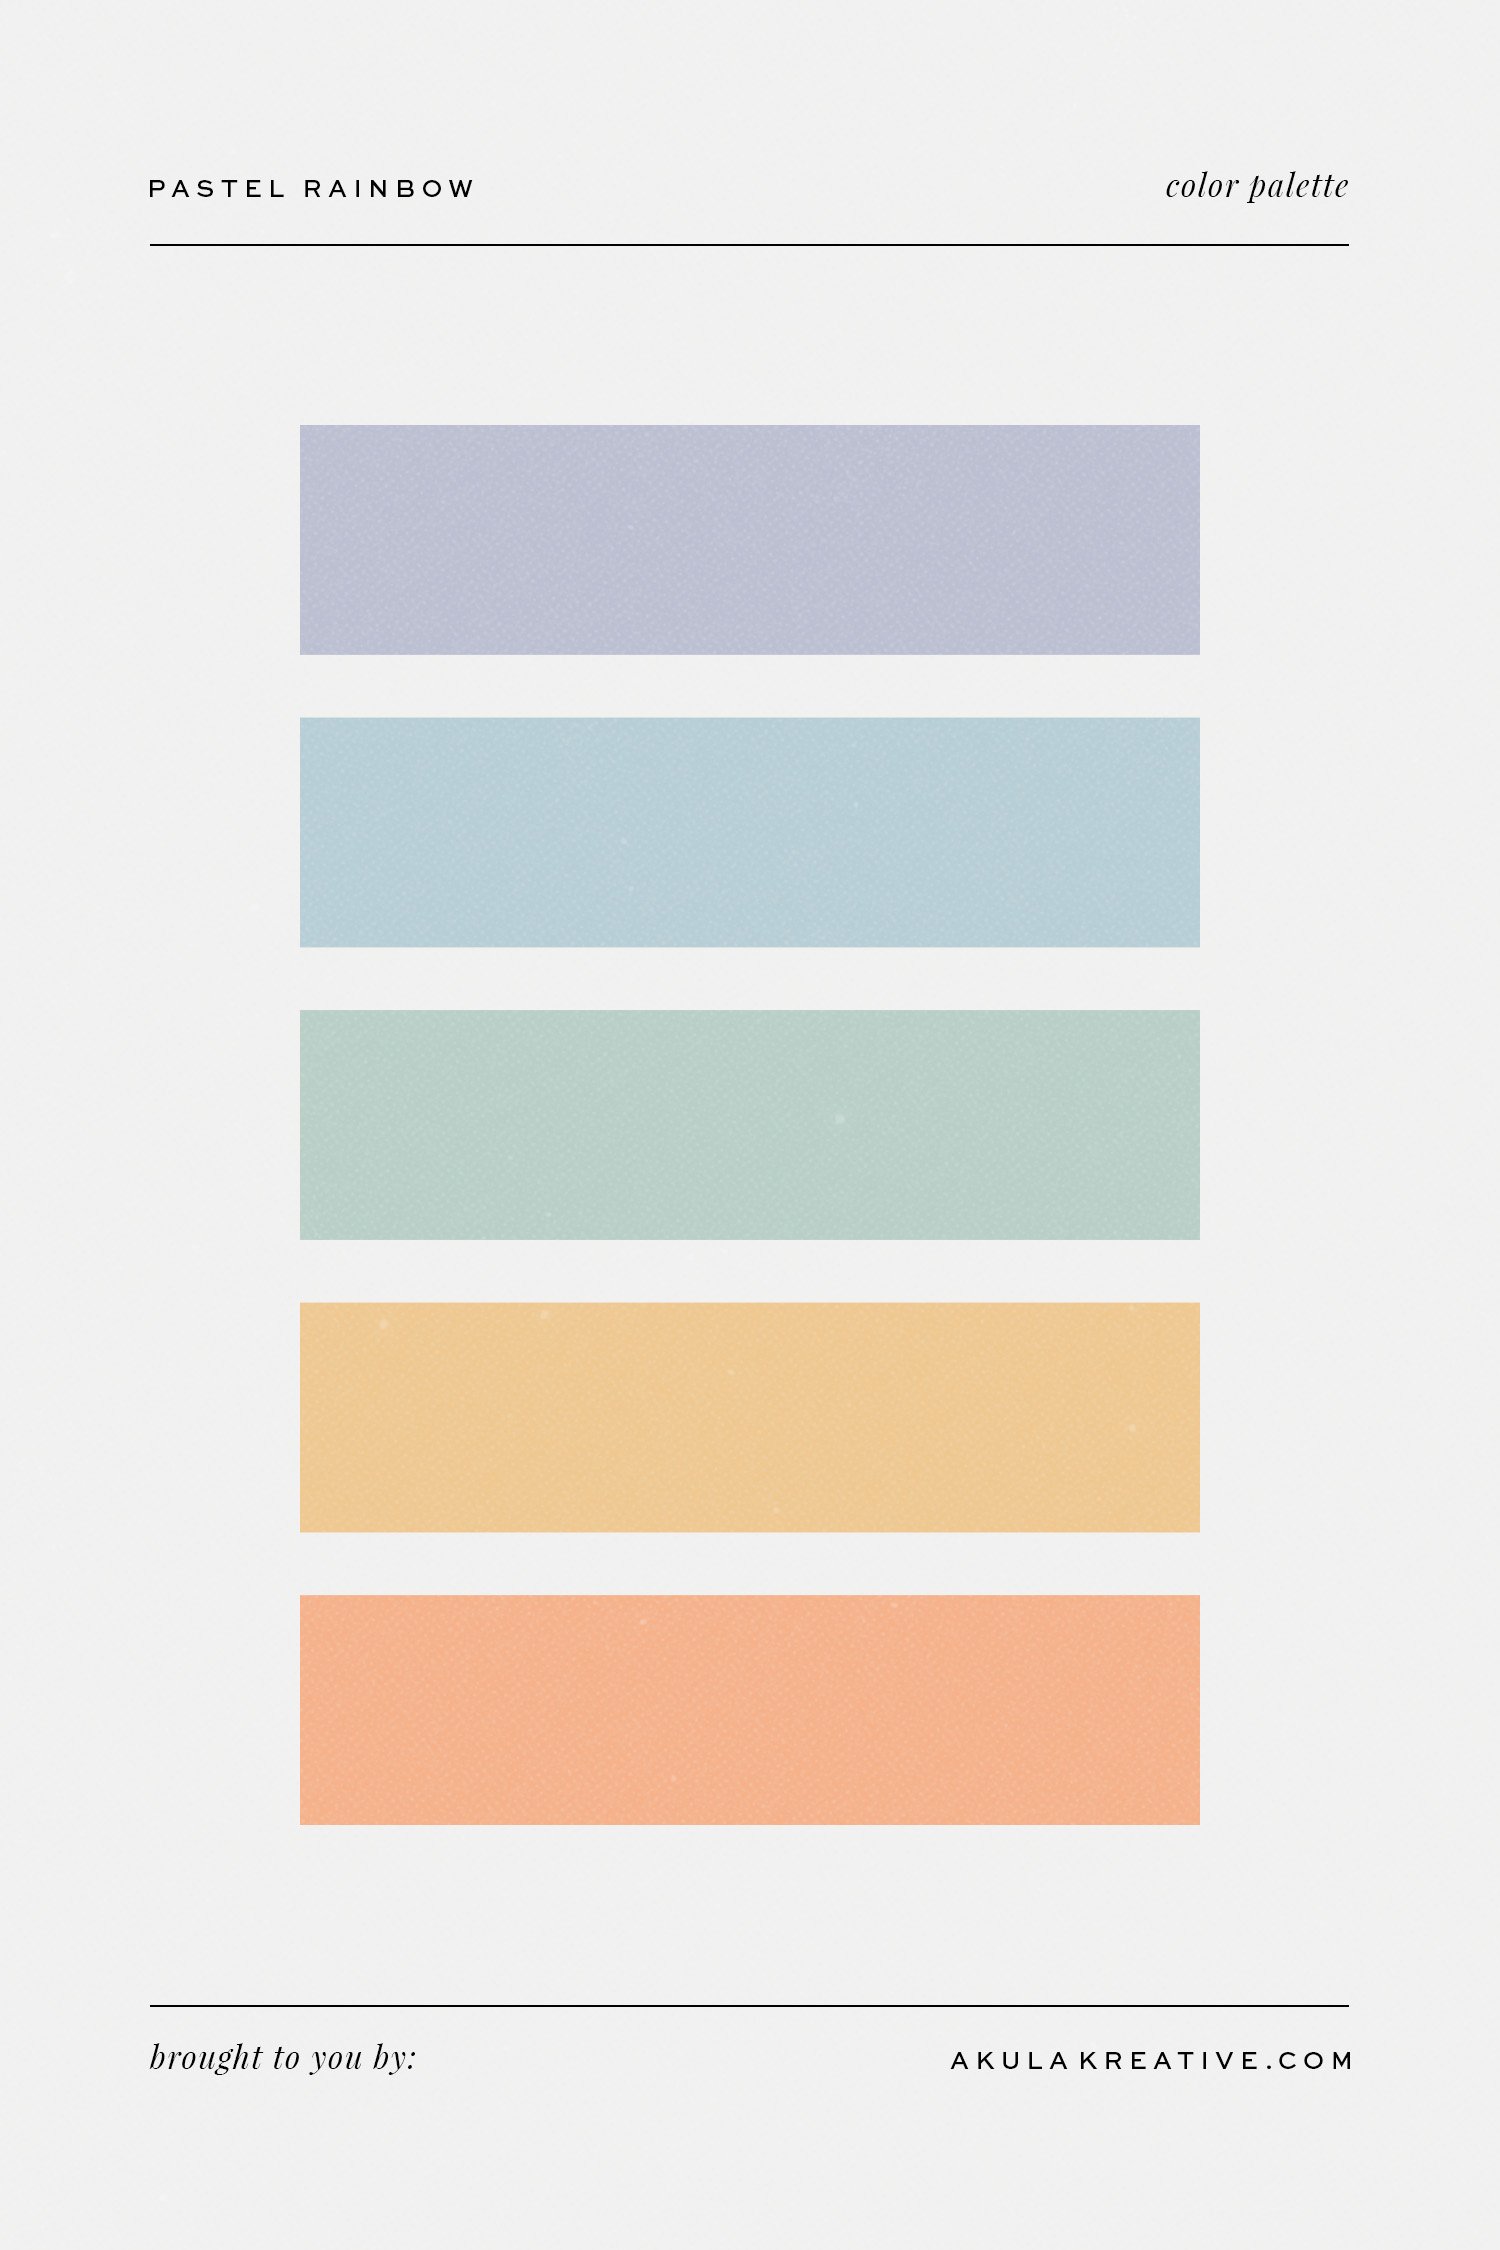 http://static1.squarespace.com/static/64ee2d375f65fc4c58e1cb98/65426d3b2e5f381898d4e2f6/65426d3cf655421247b399b0/1704739658744/pastel-rainbow-color-palette-gray-lavender-blue-green-yellow-orange.jpg?format=1500w